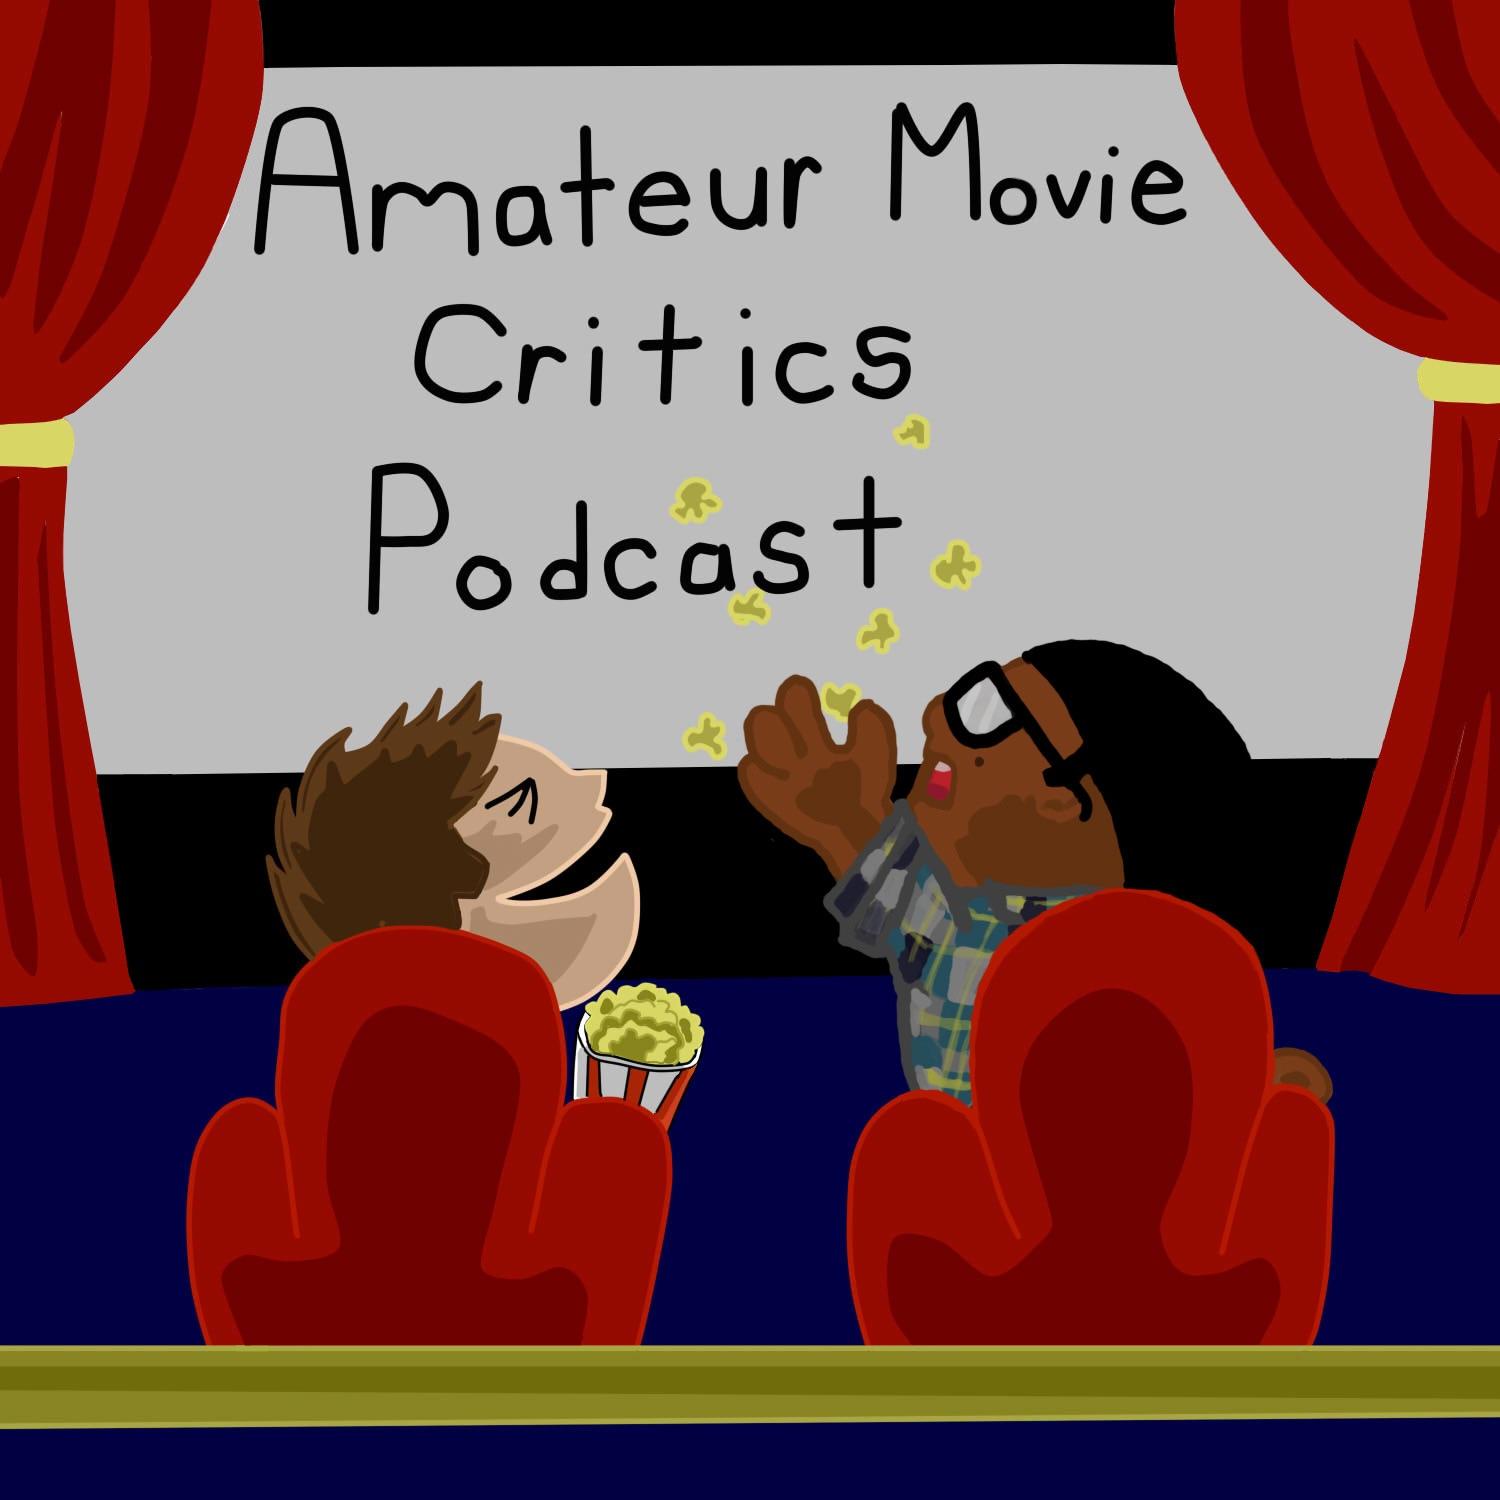 Amateur Movie Critics Podcast